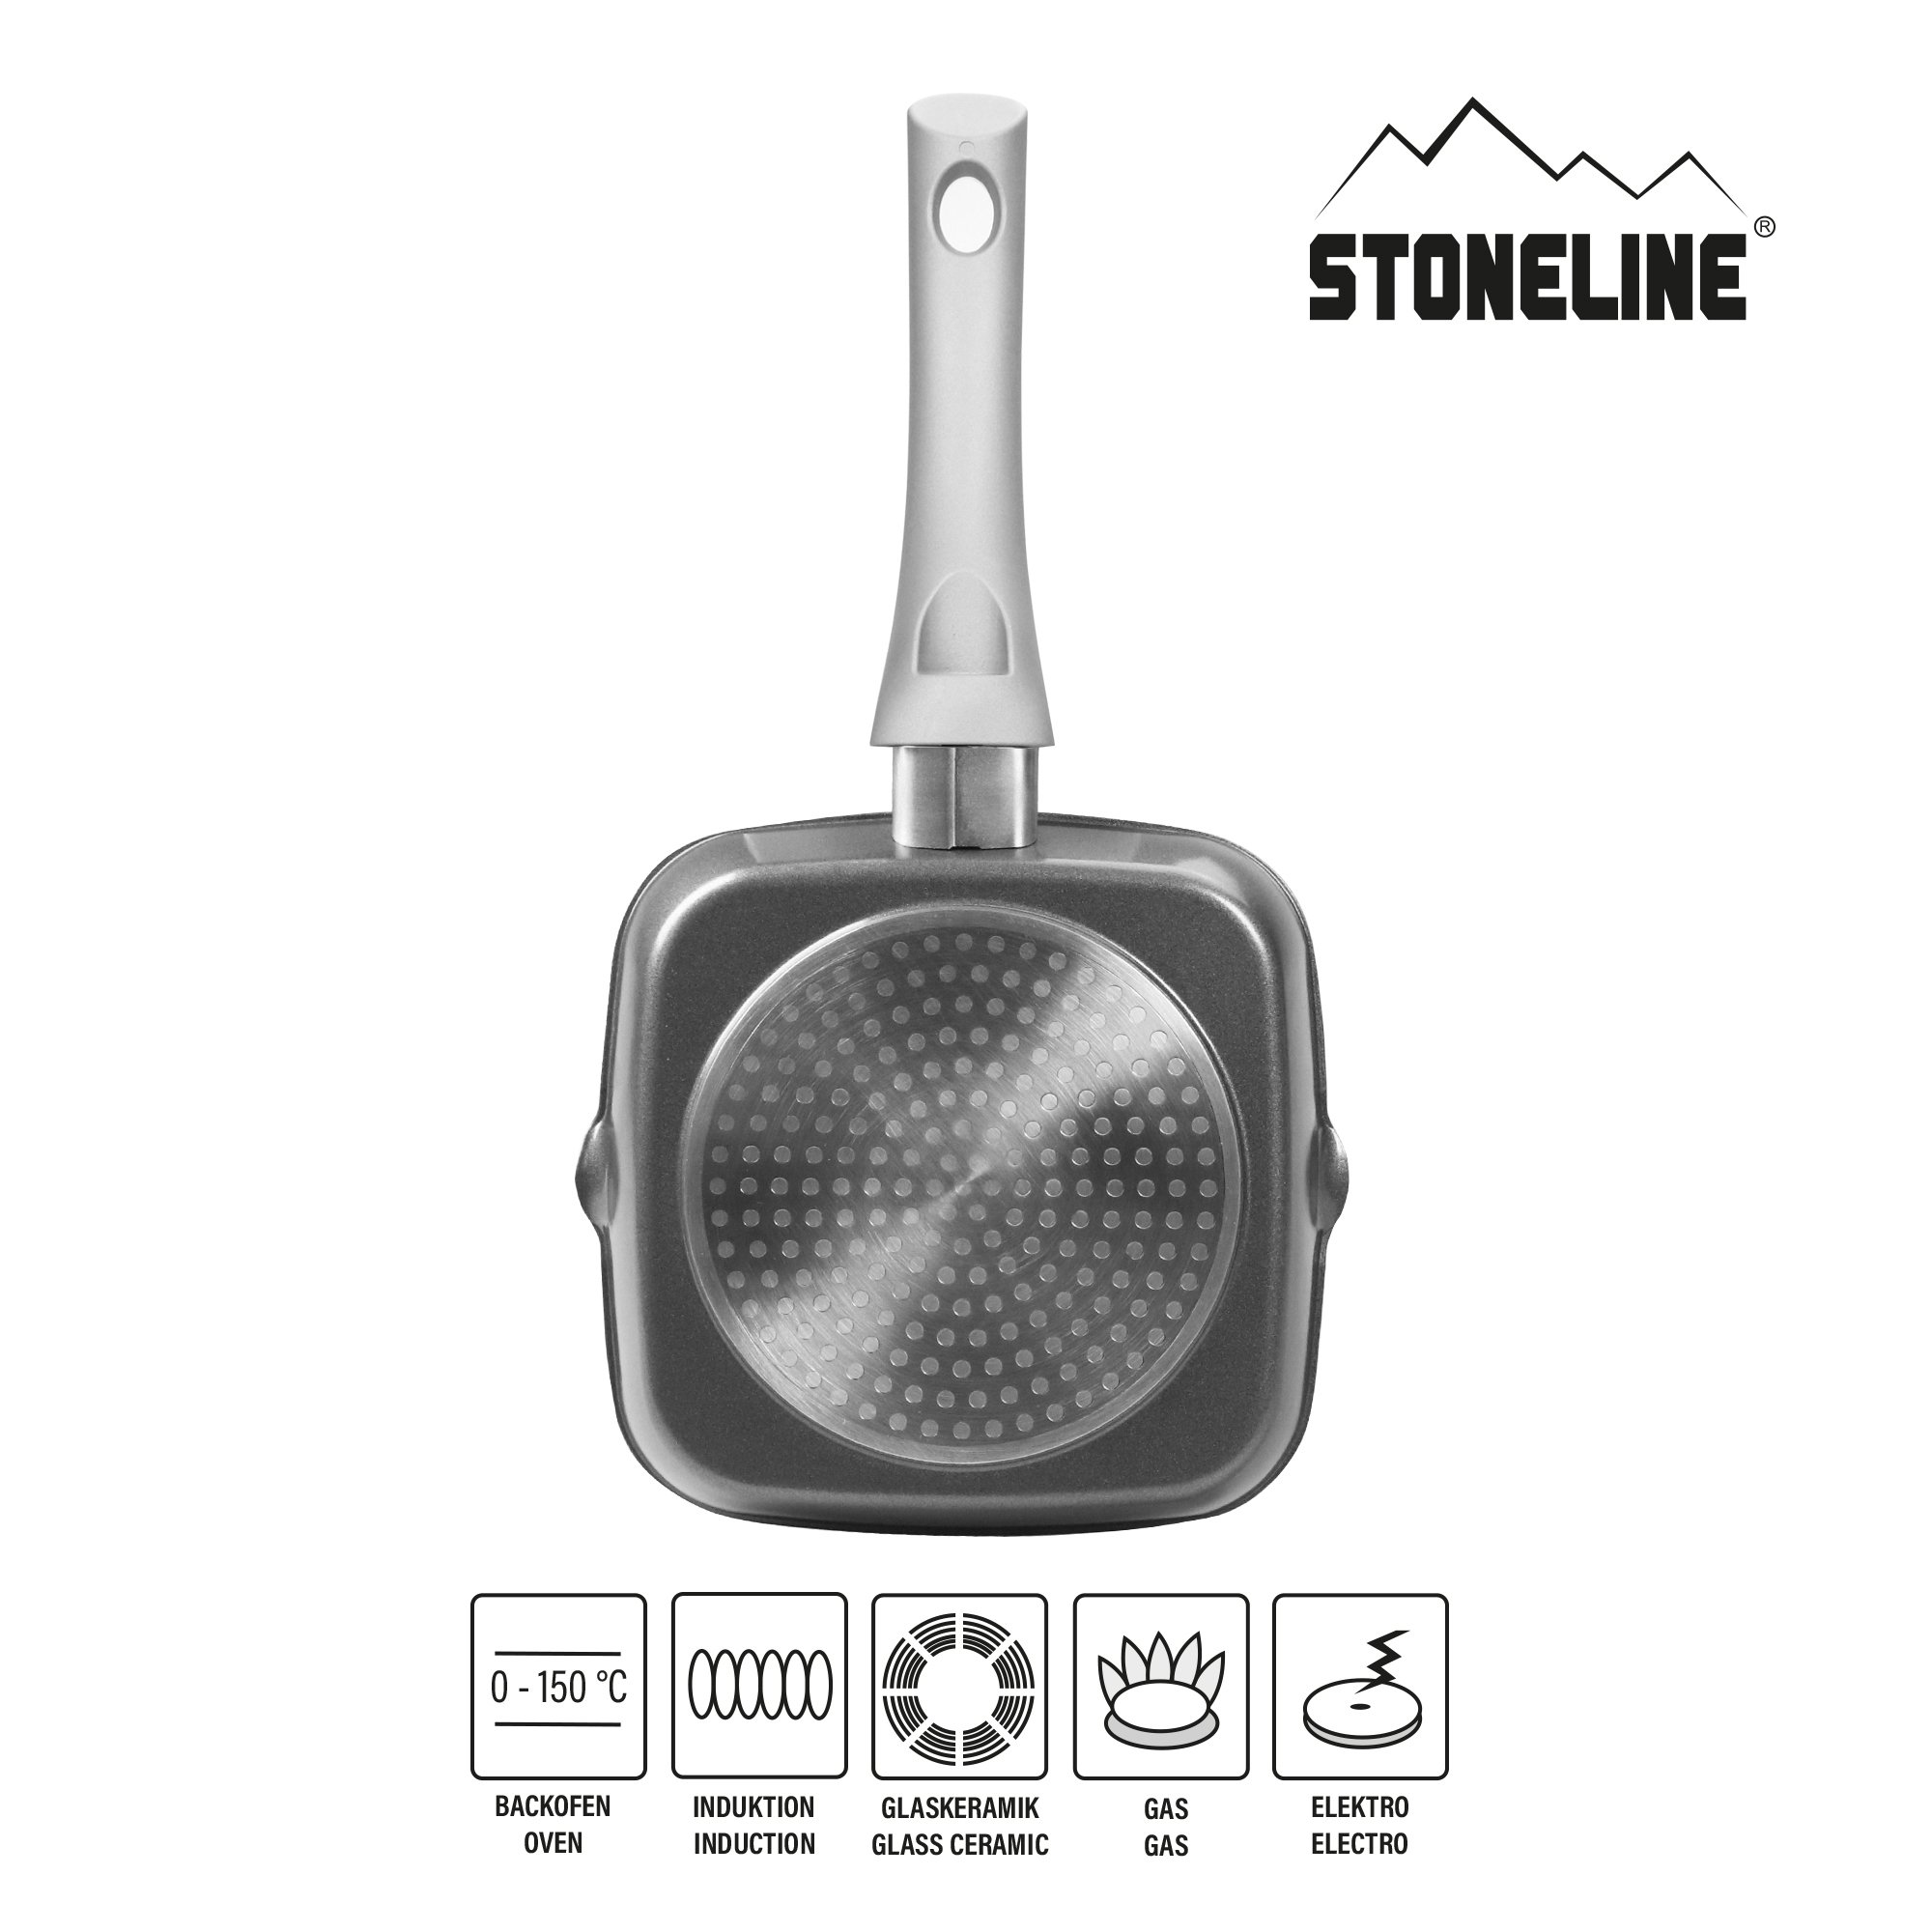 STONELINE® BBQ Griddle Pan 16 cm, 2 Spouts, Non-Stick Pan | GOURMUNDO